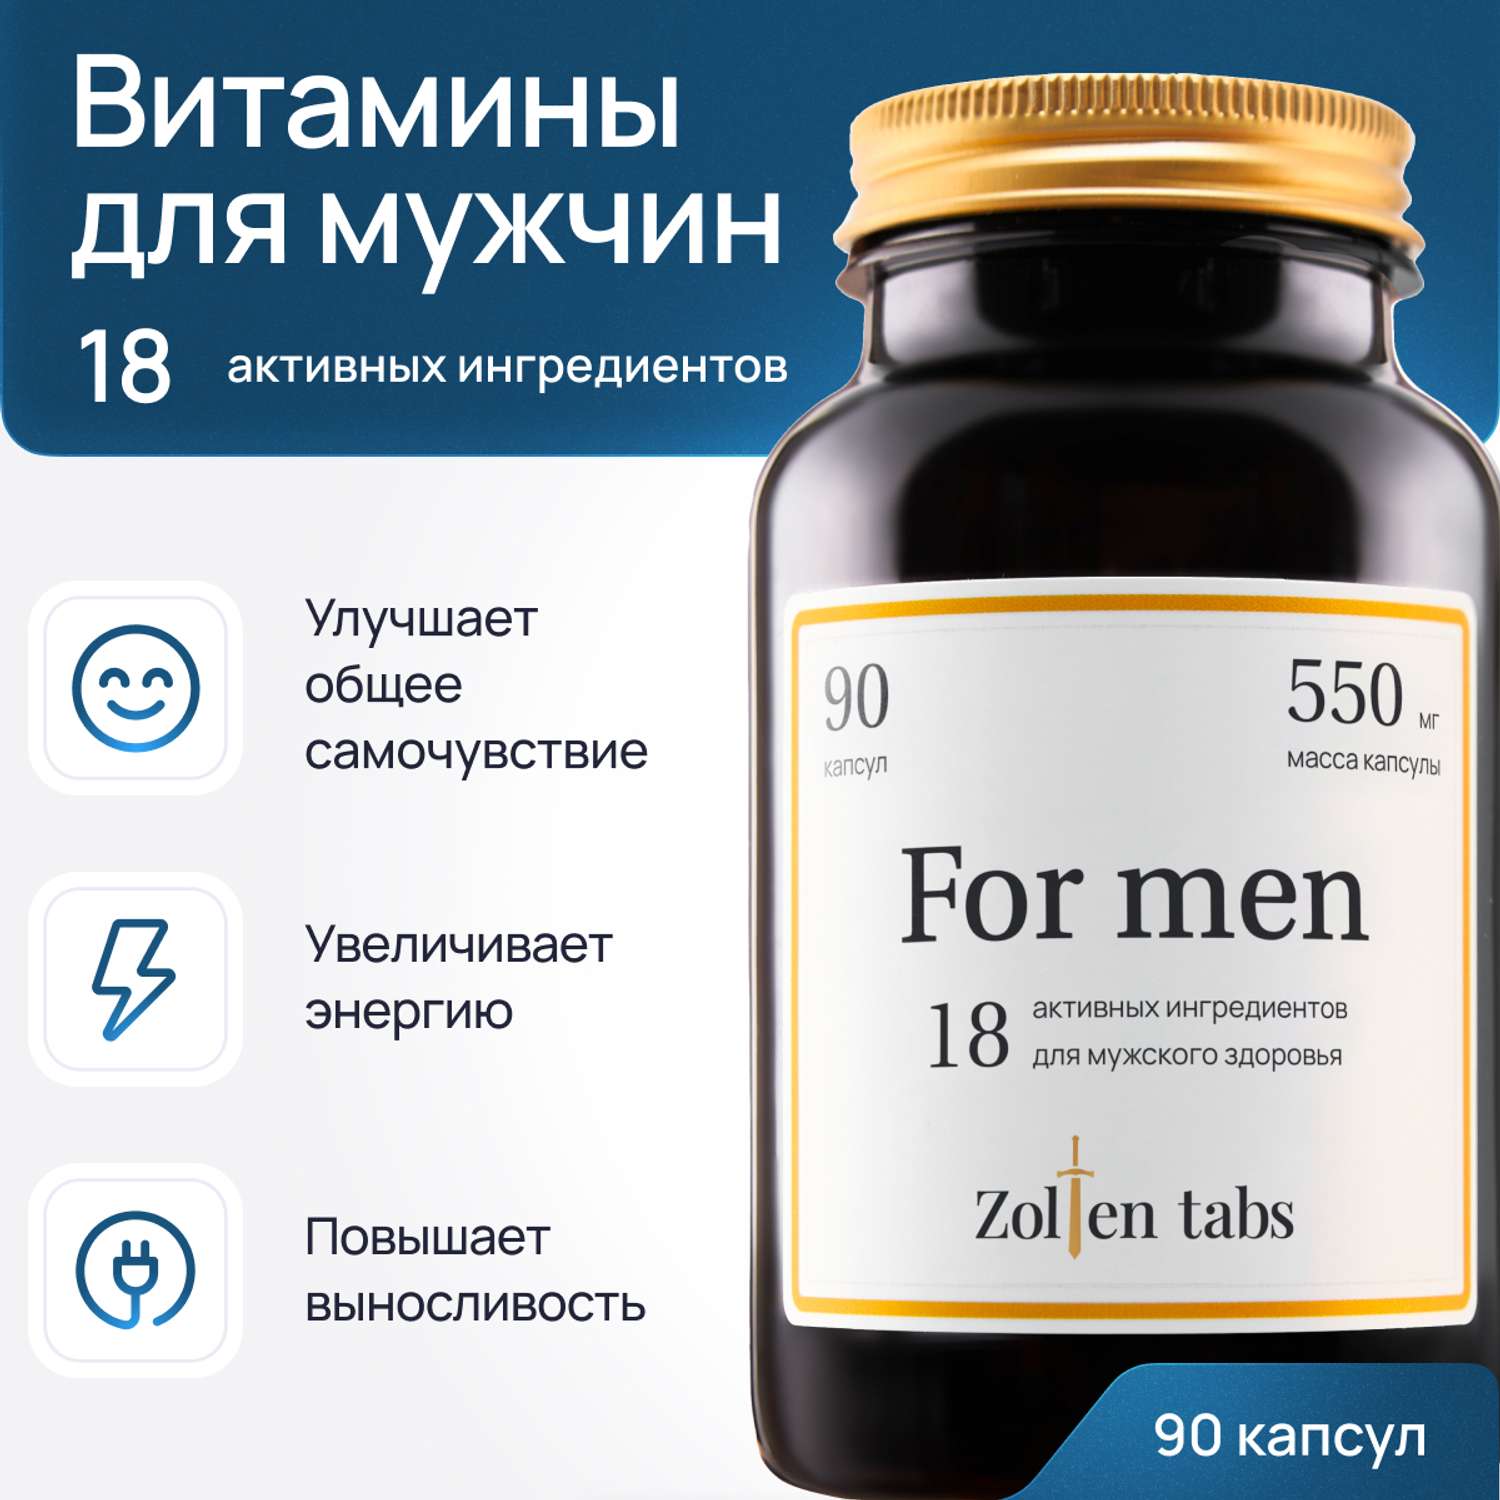 Витамины для мужчин Zolten Tabs комплекс для занятий спортом и здоровья 90 капсул - фото 1